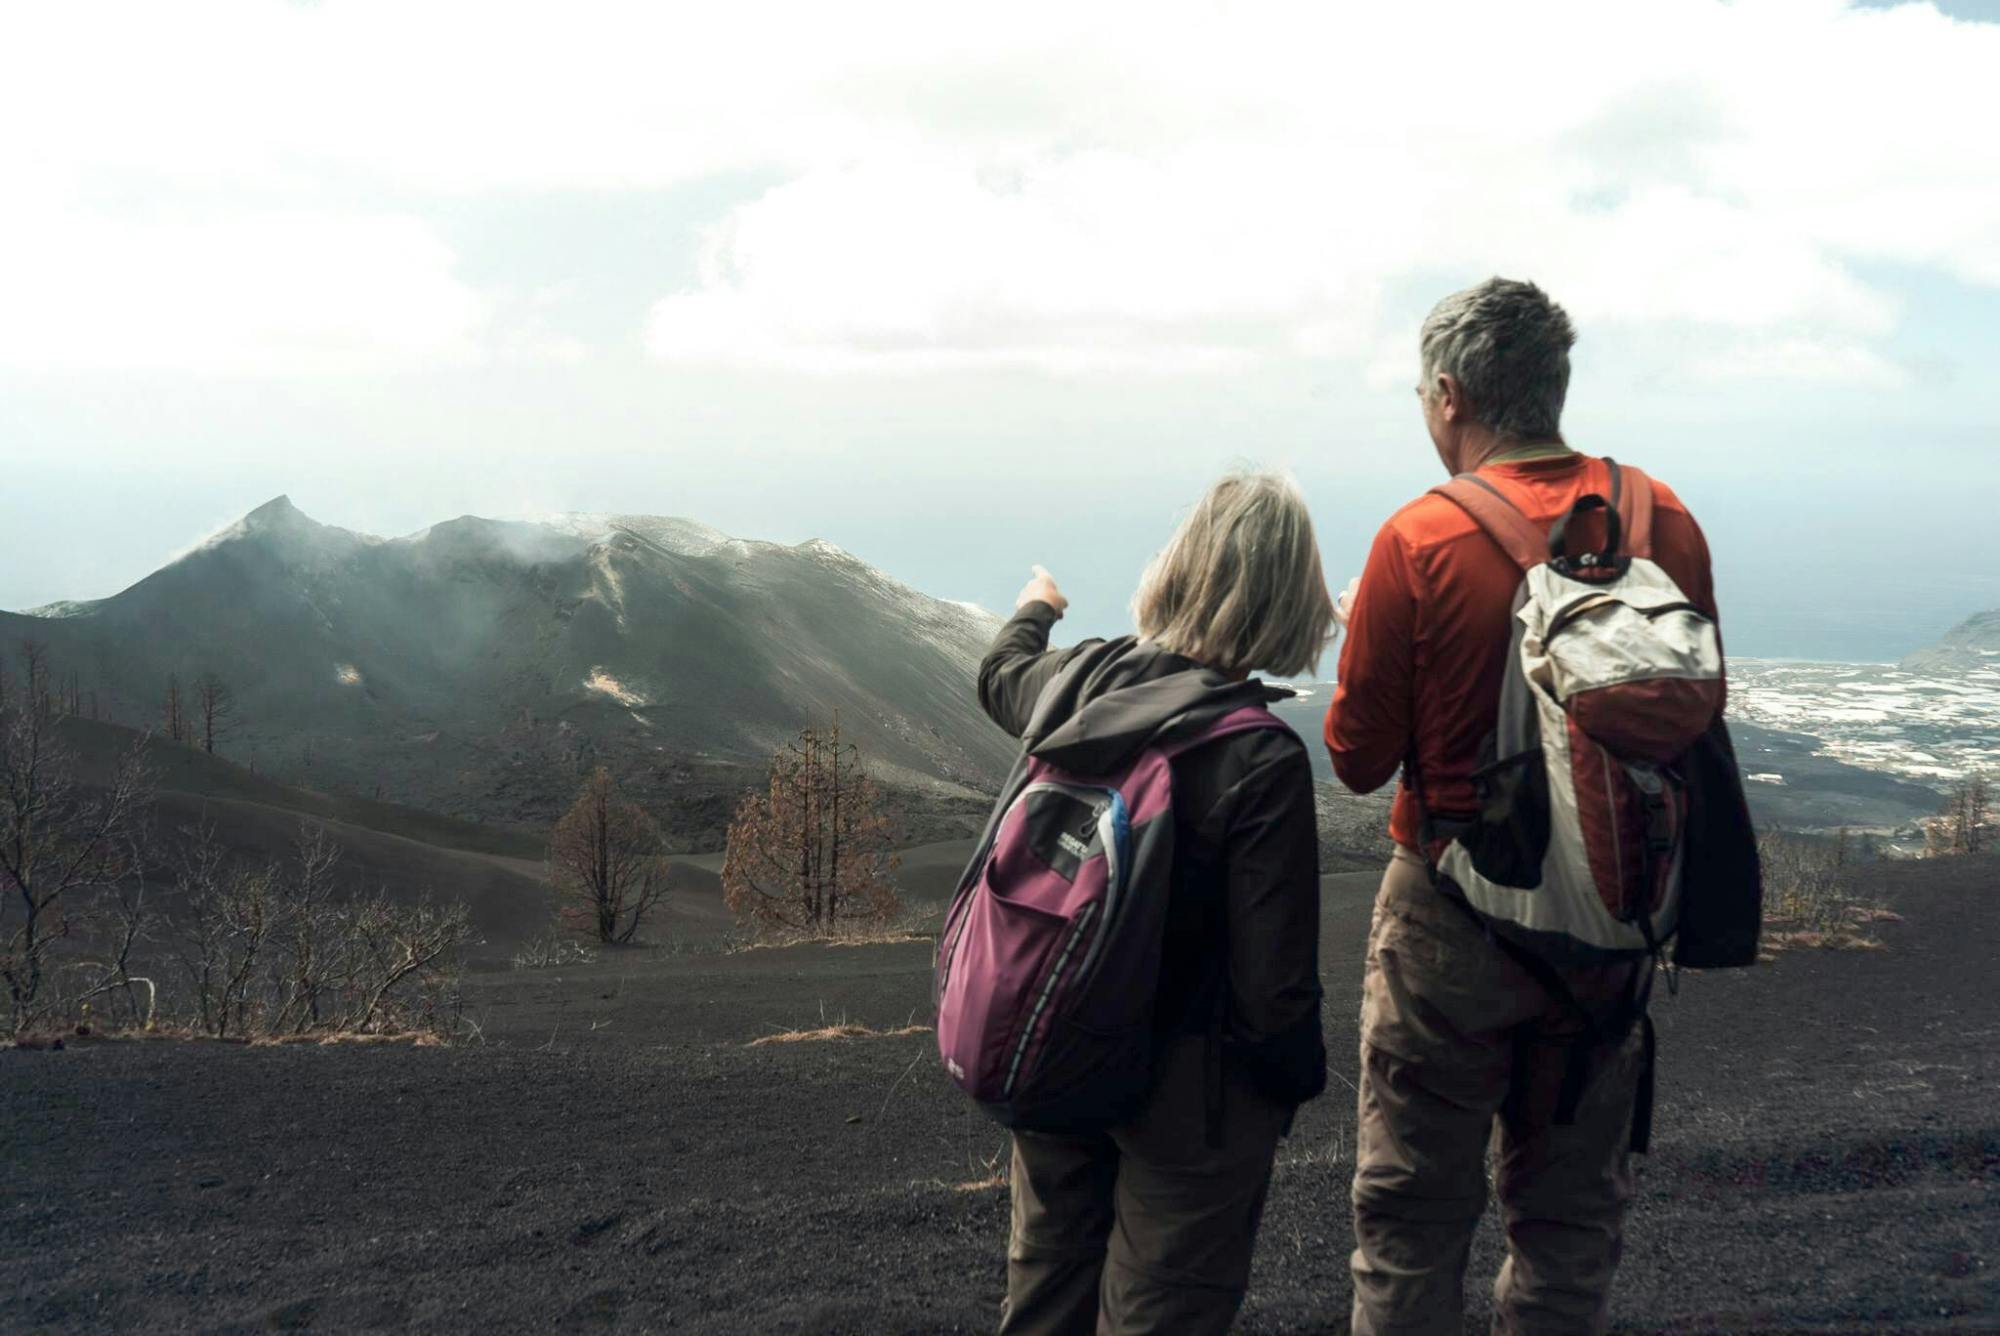 Tajogaite Volcano Hiking Tour